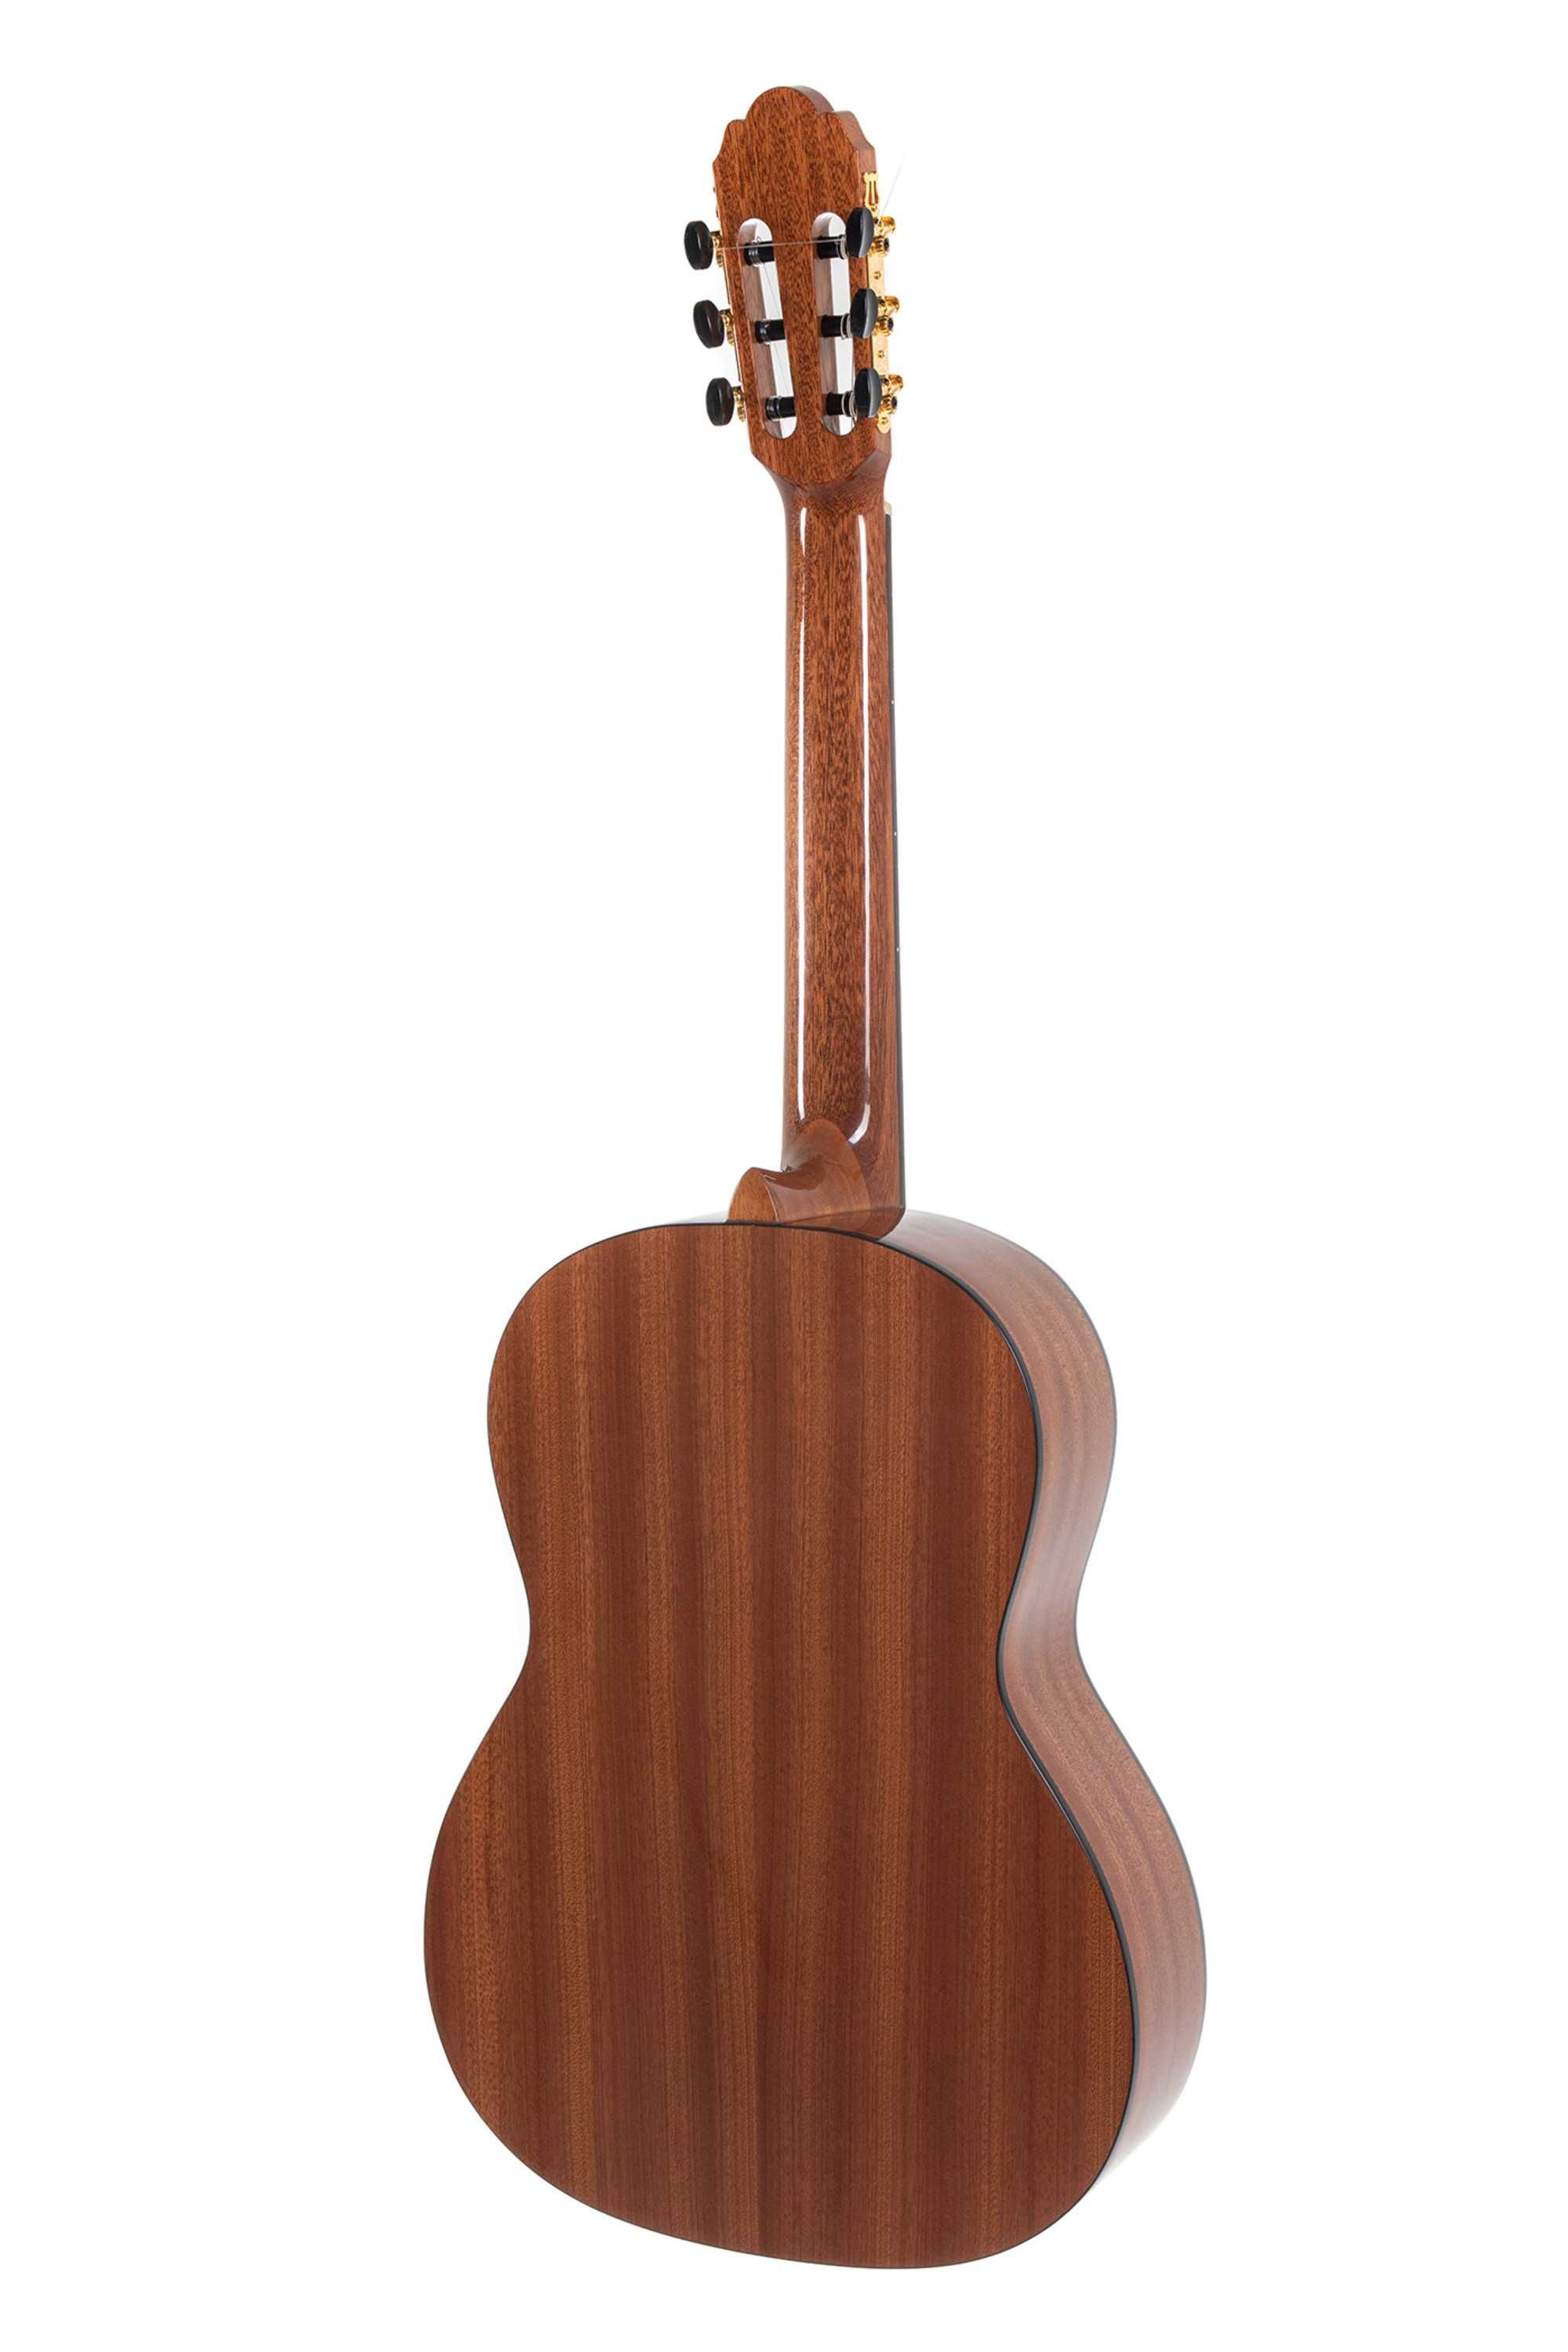 VGS PRO ART GC210A 4/4 świerk/mahoń gitara klasyczna